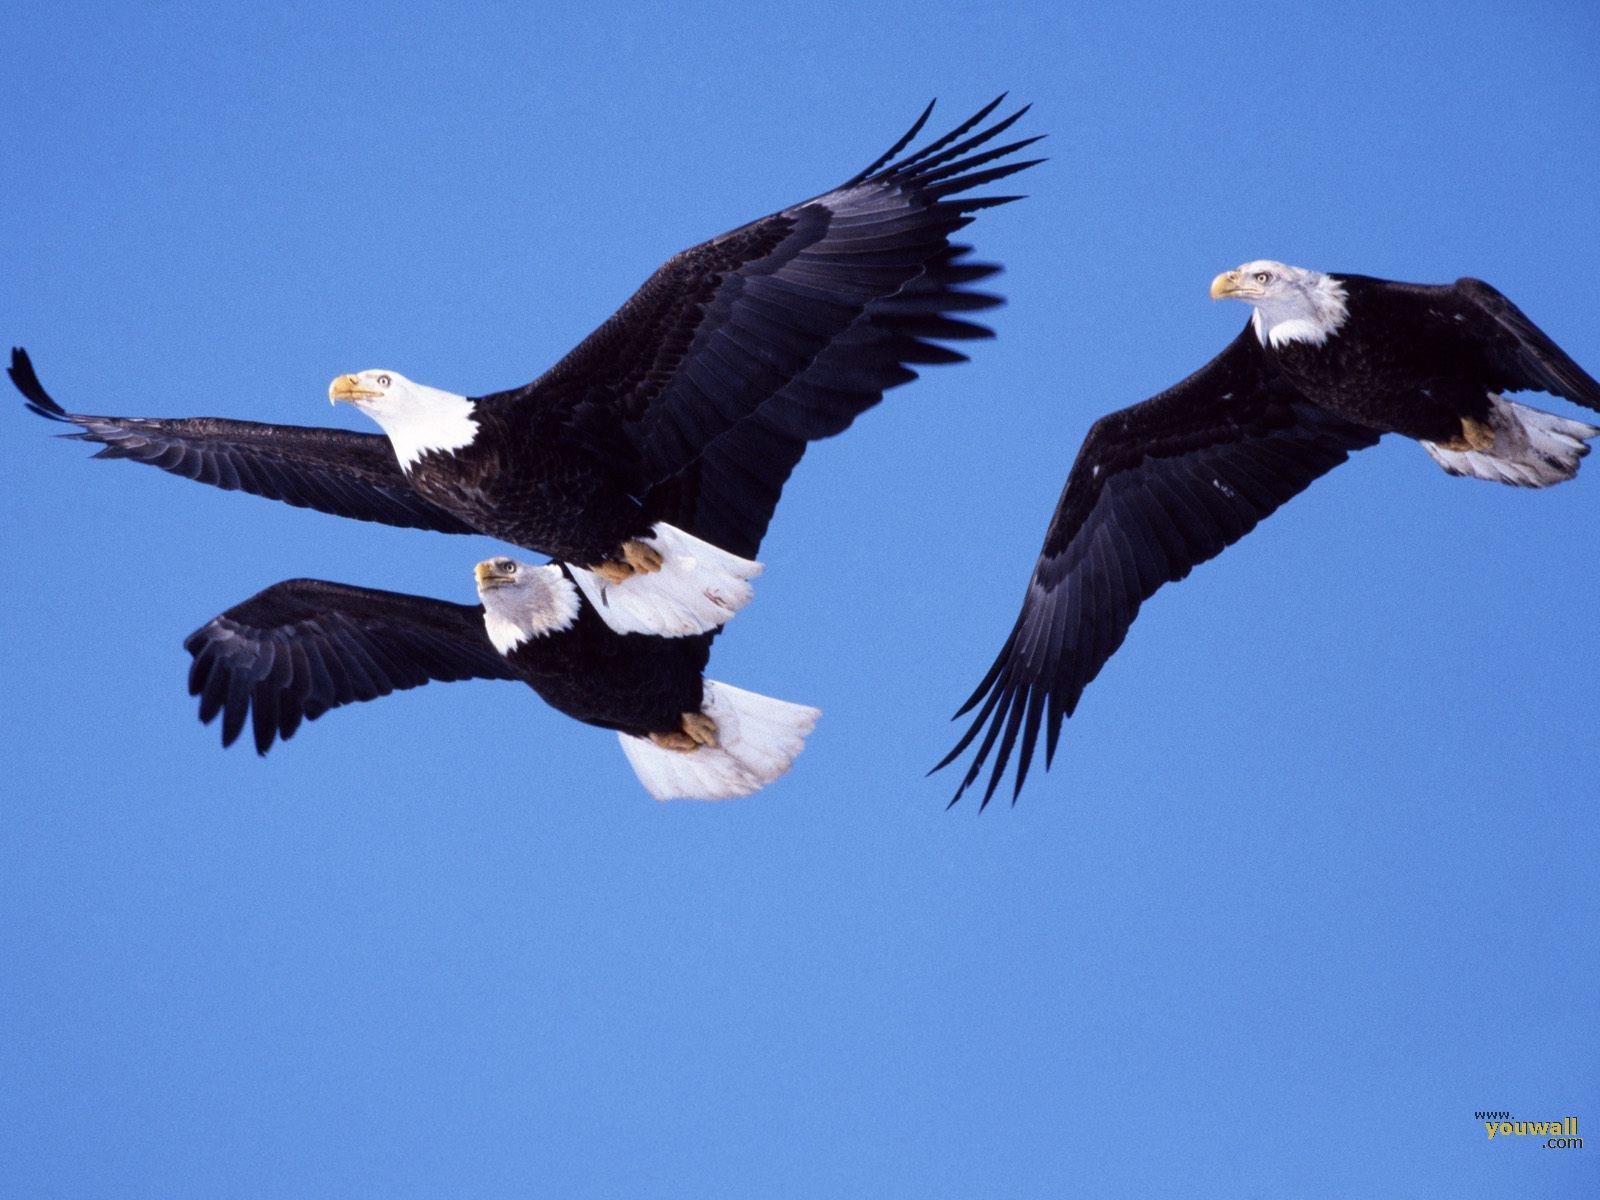 image For > Image Of Flying Eagles